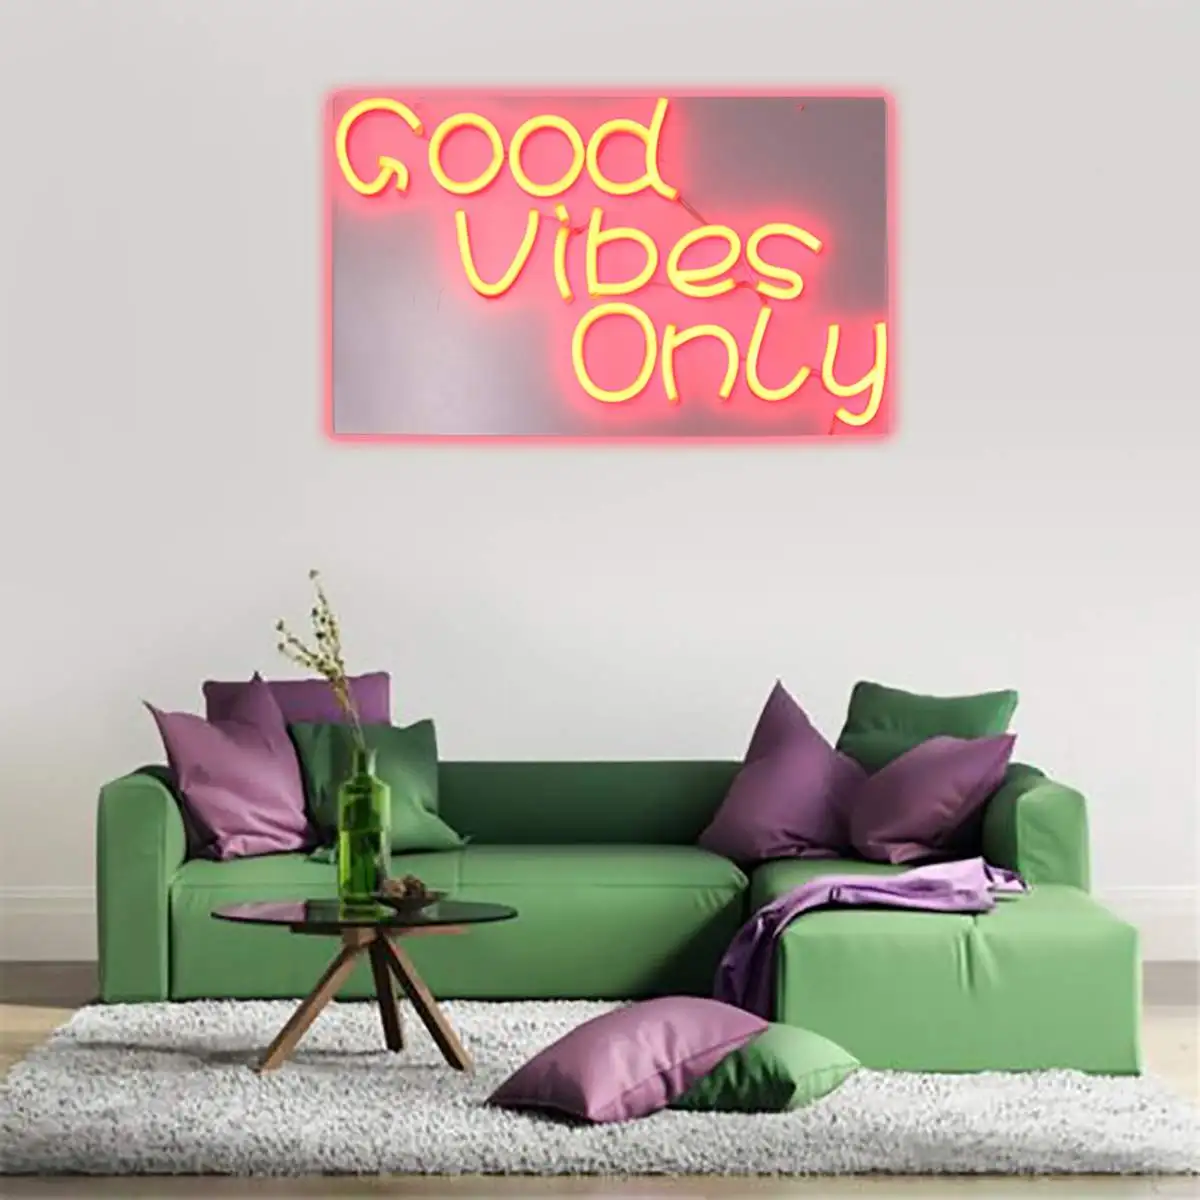 

Good Vibes Only Neon Art Sign LED Light Tube Handmade Visual Artwork Wall Decoration Colorful Neon Bulbs Billboard 60cmX35cm